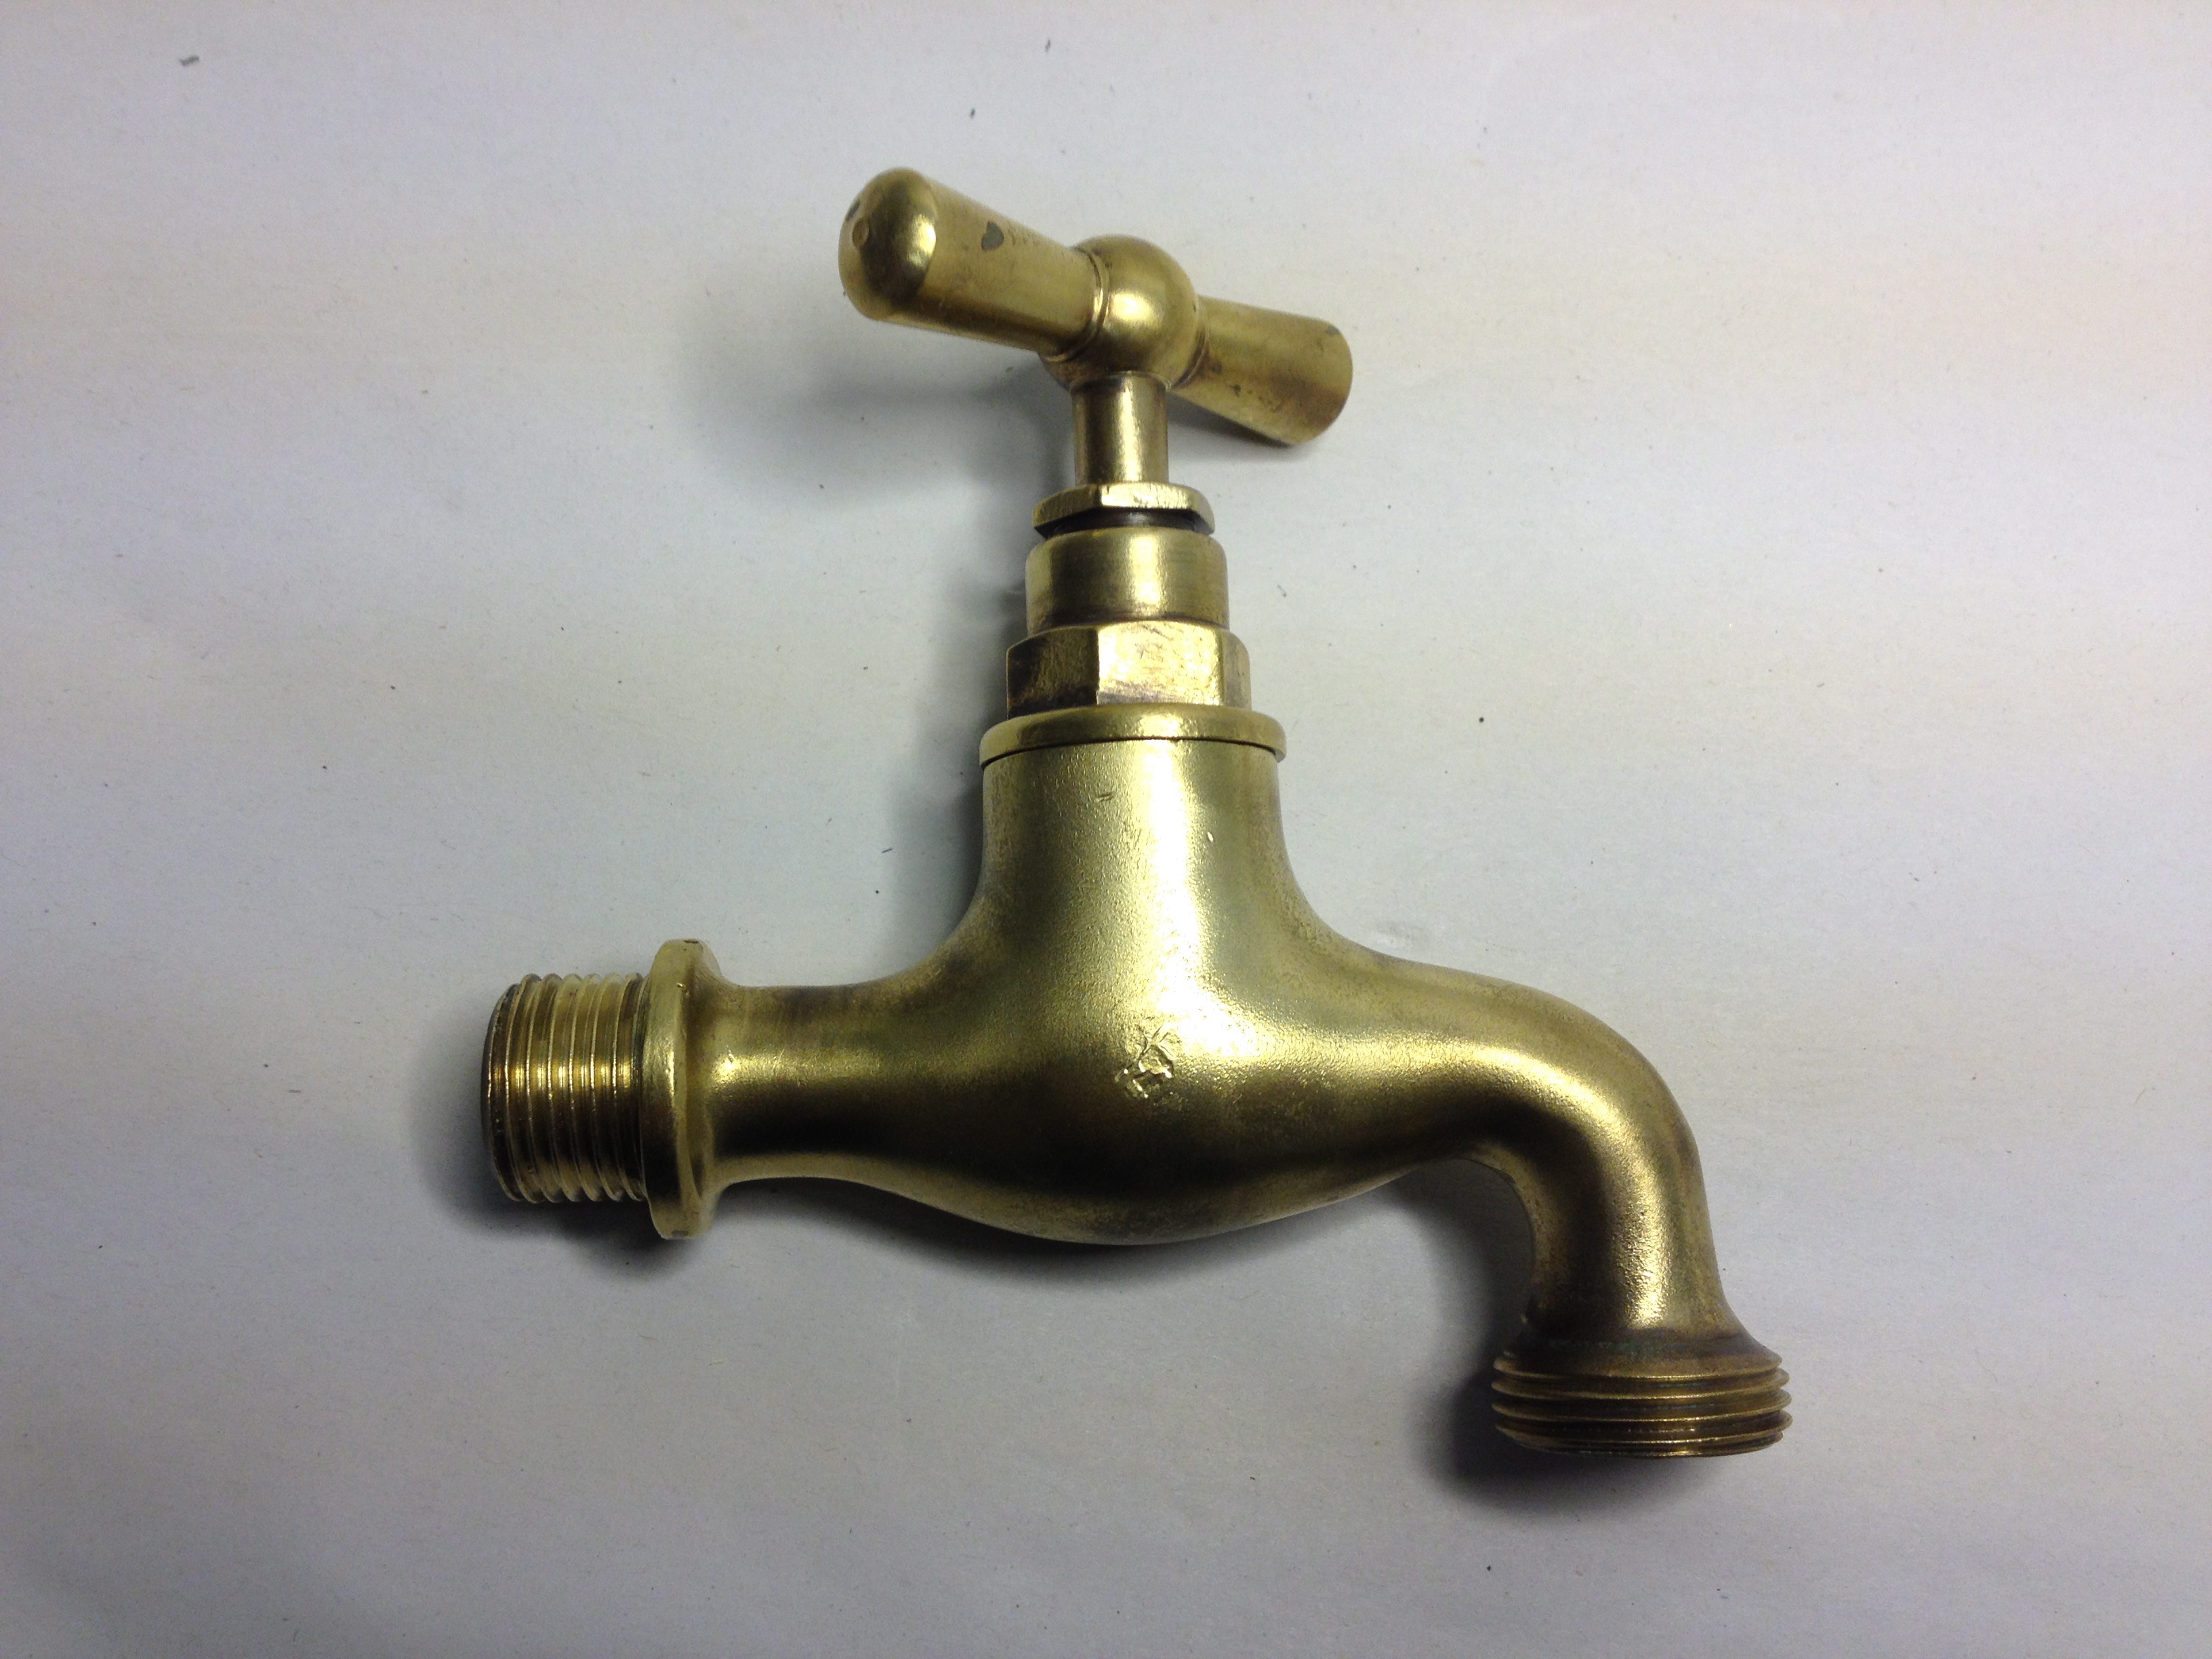 A “Burnished Brass” garden tap